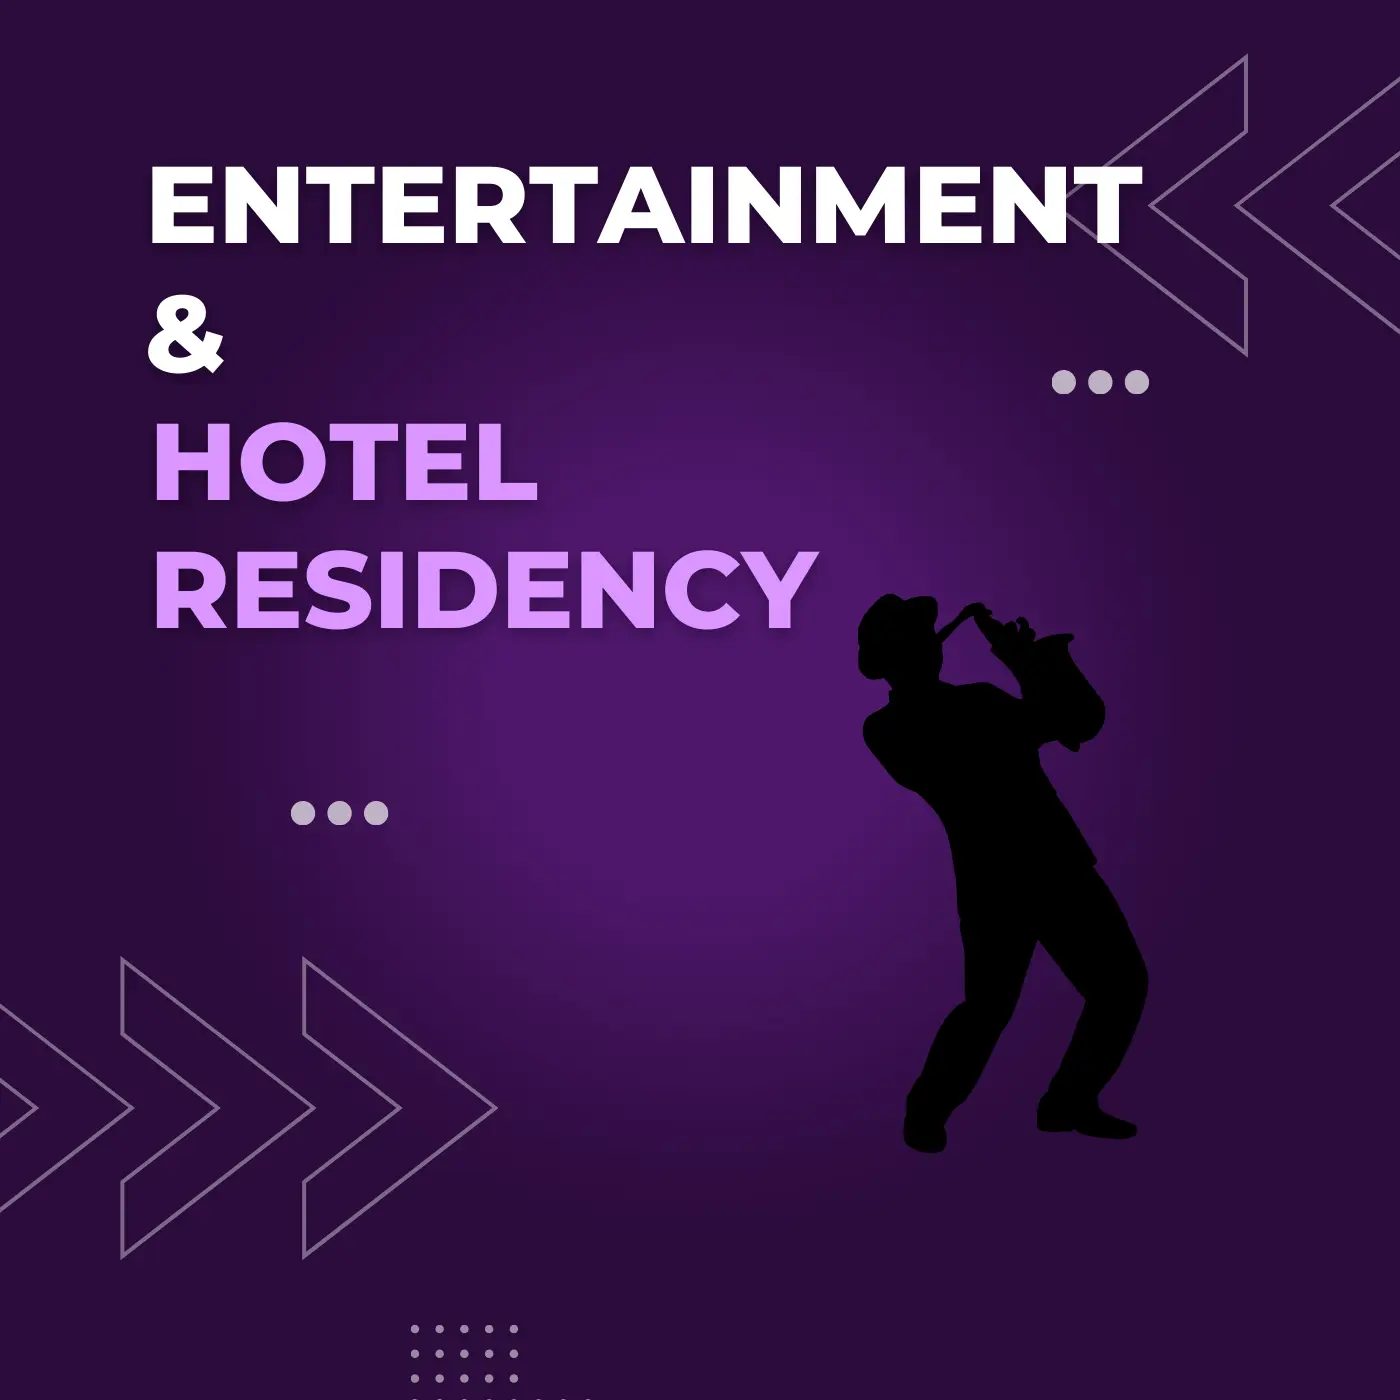 Hotel Residency Entertainment